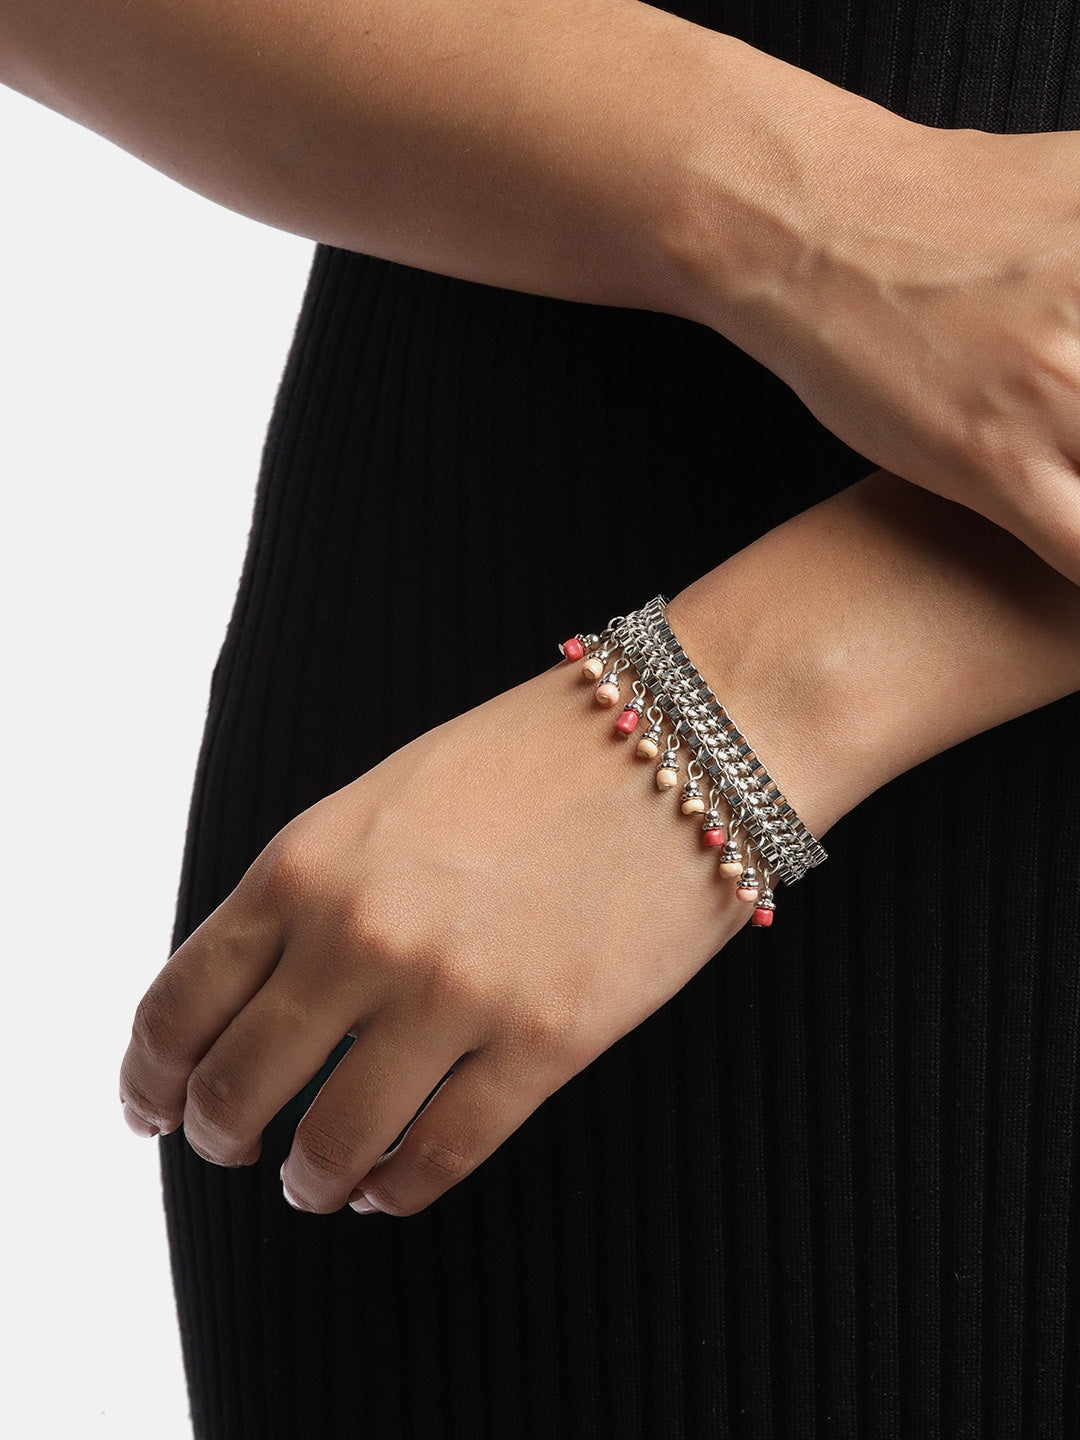 Leather bracelet plait – double wrap around the wrist, magnetic closure |  Jewelry Eshop